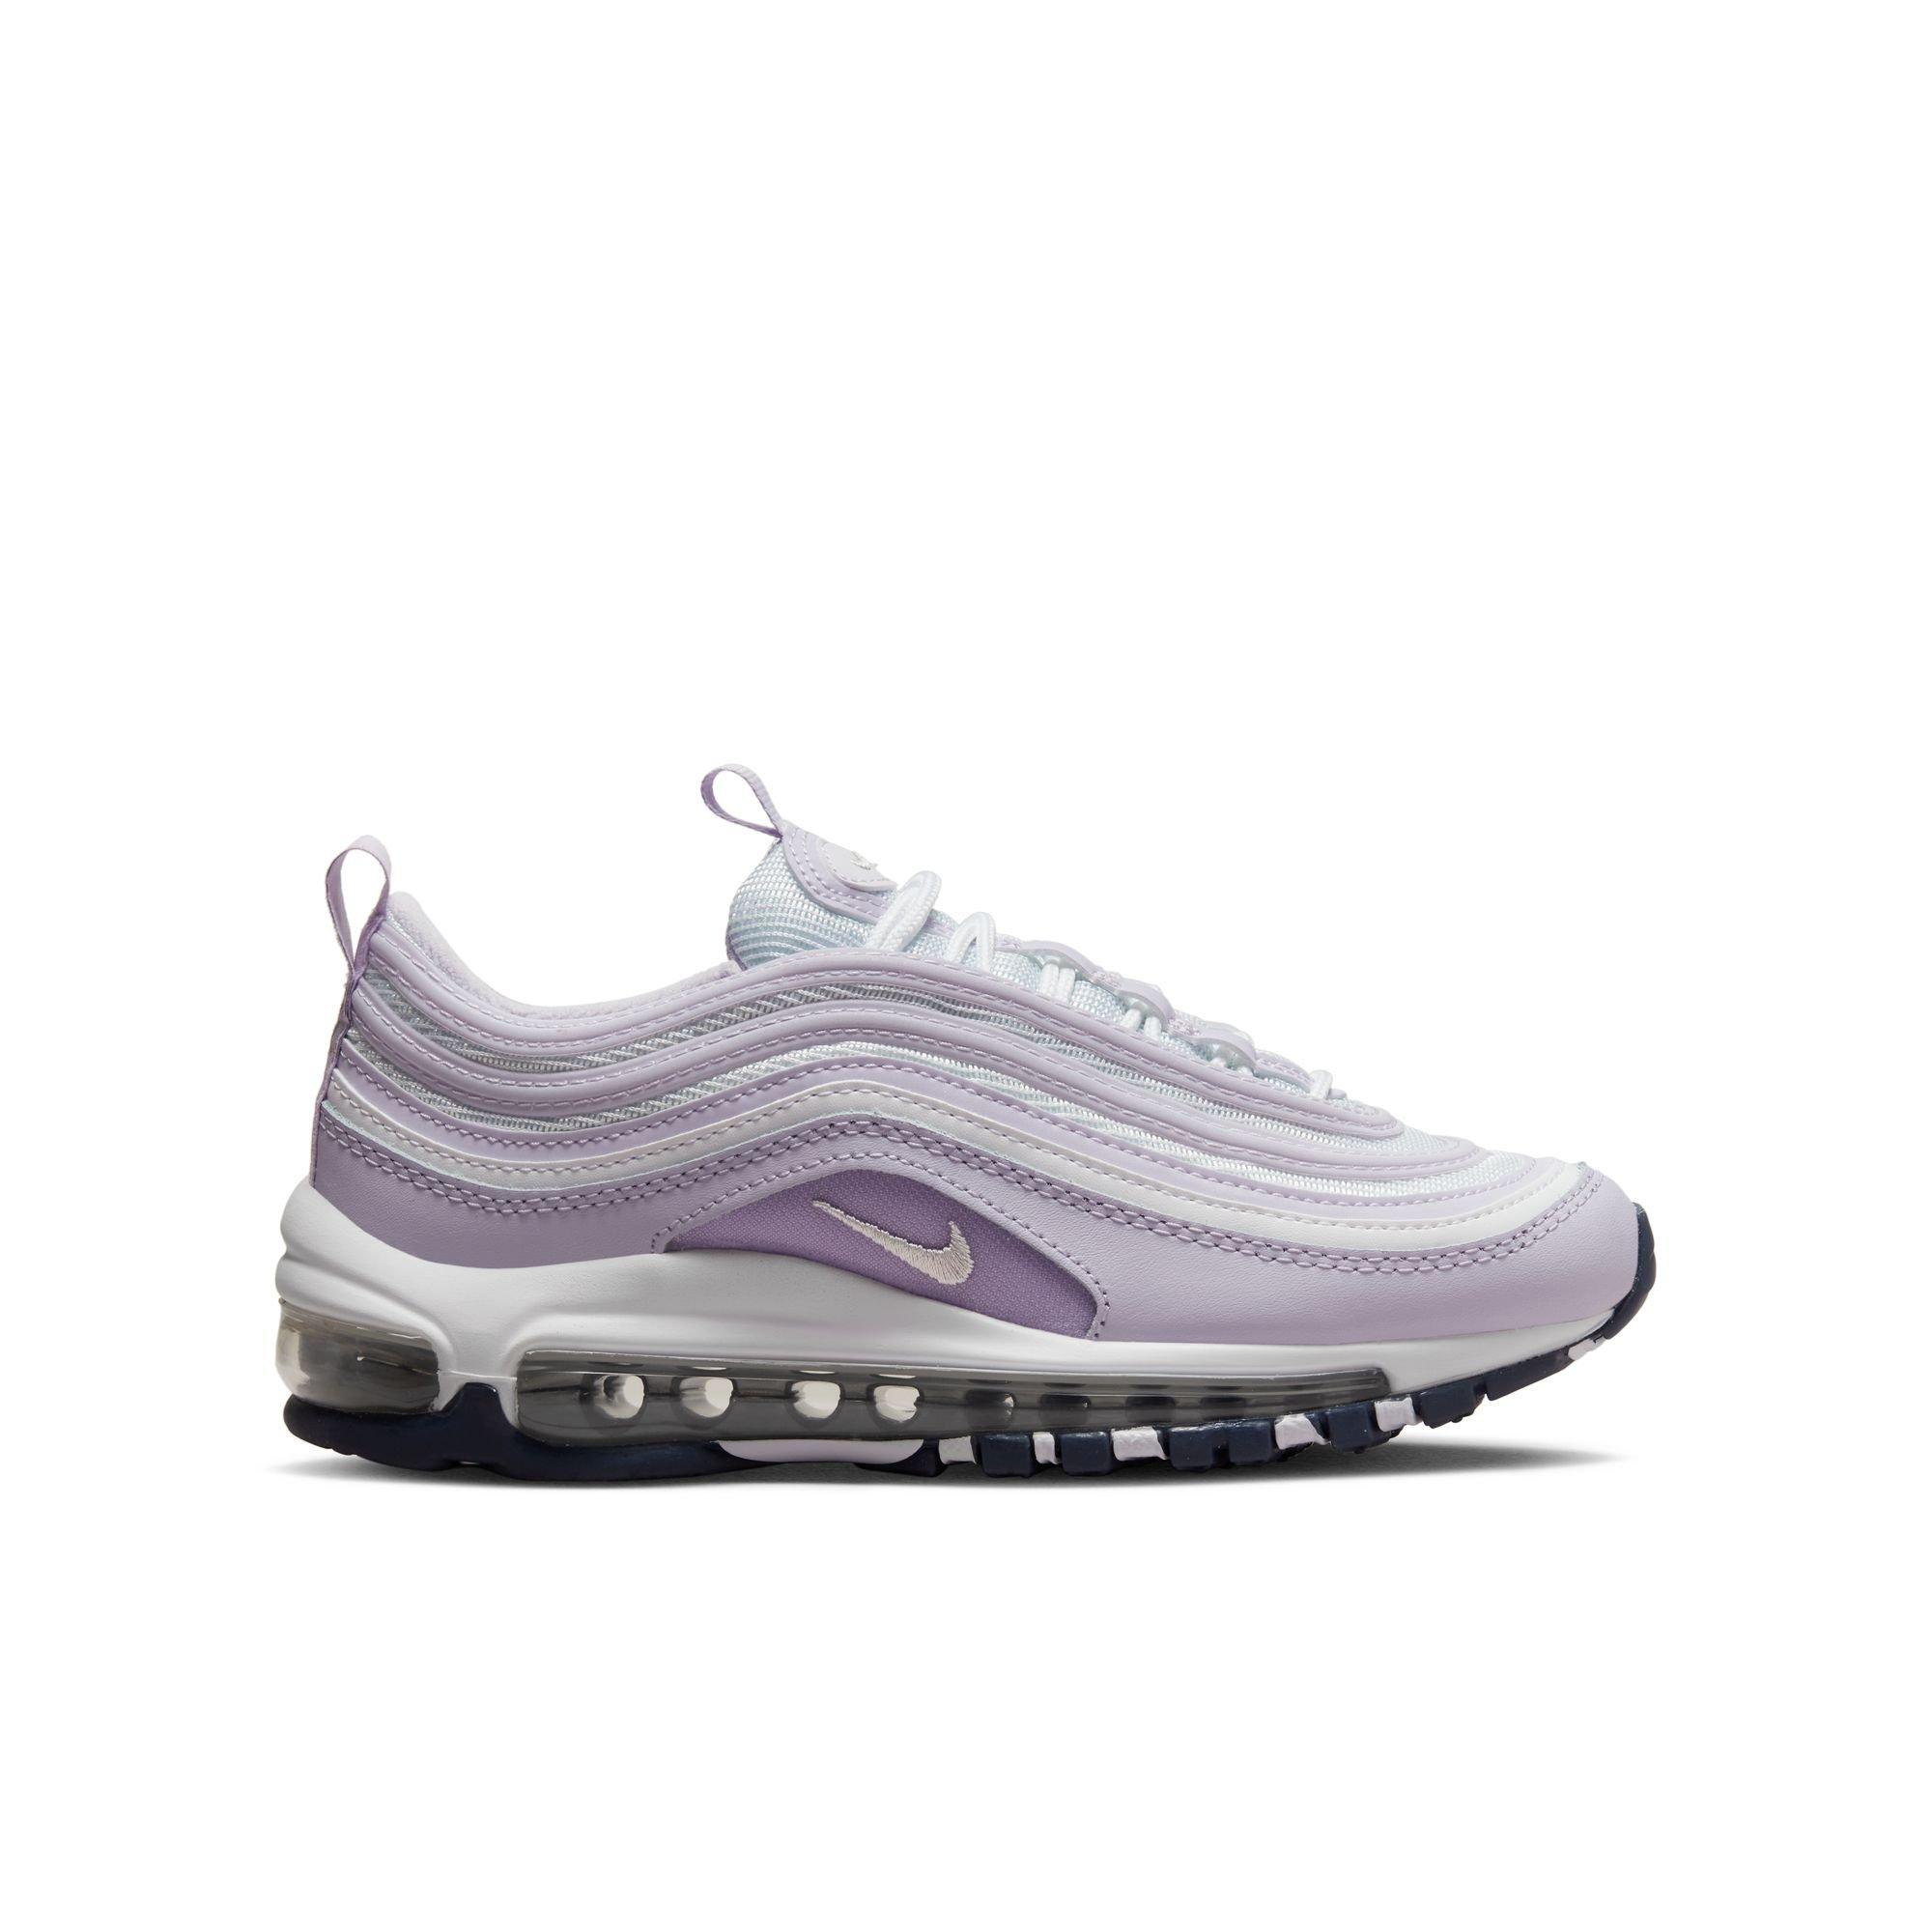 purple and white air max 97